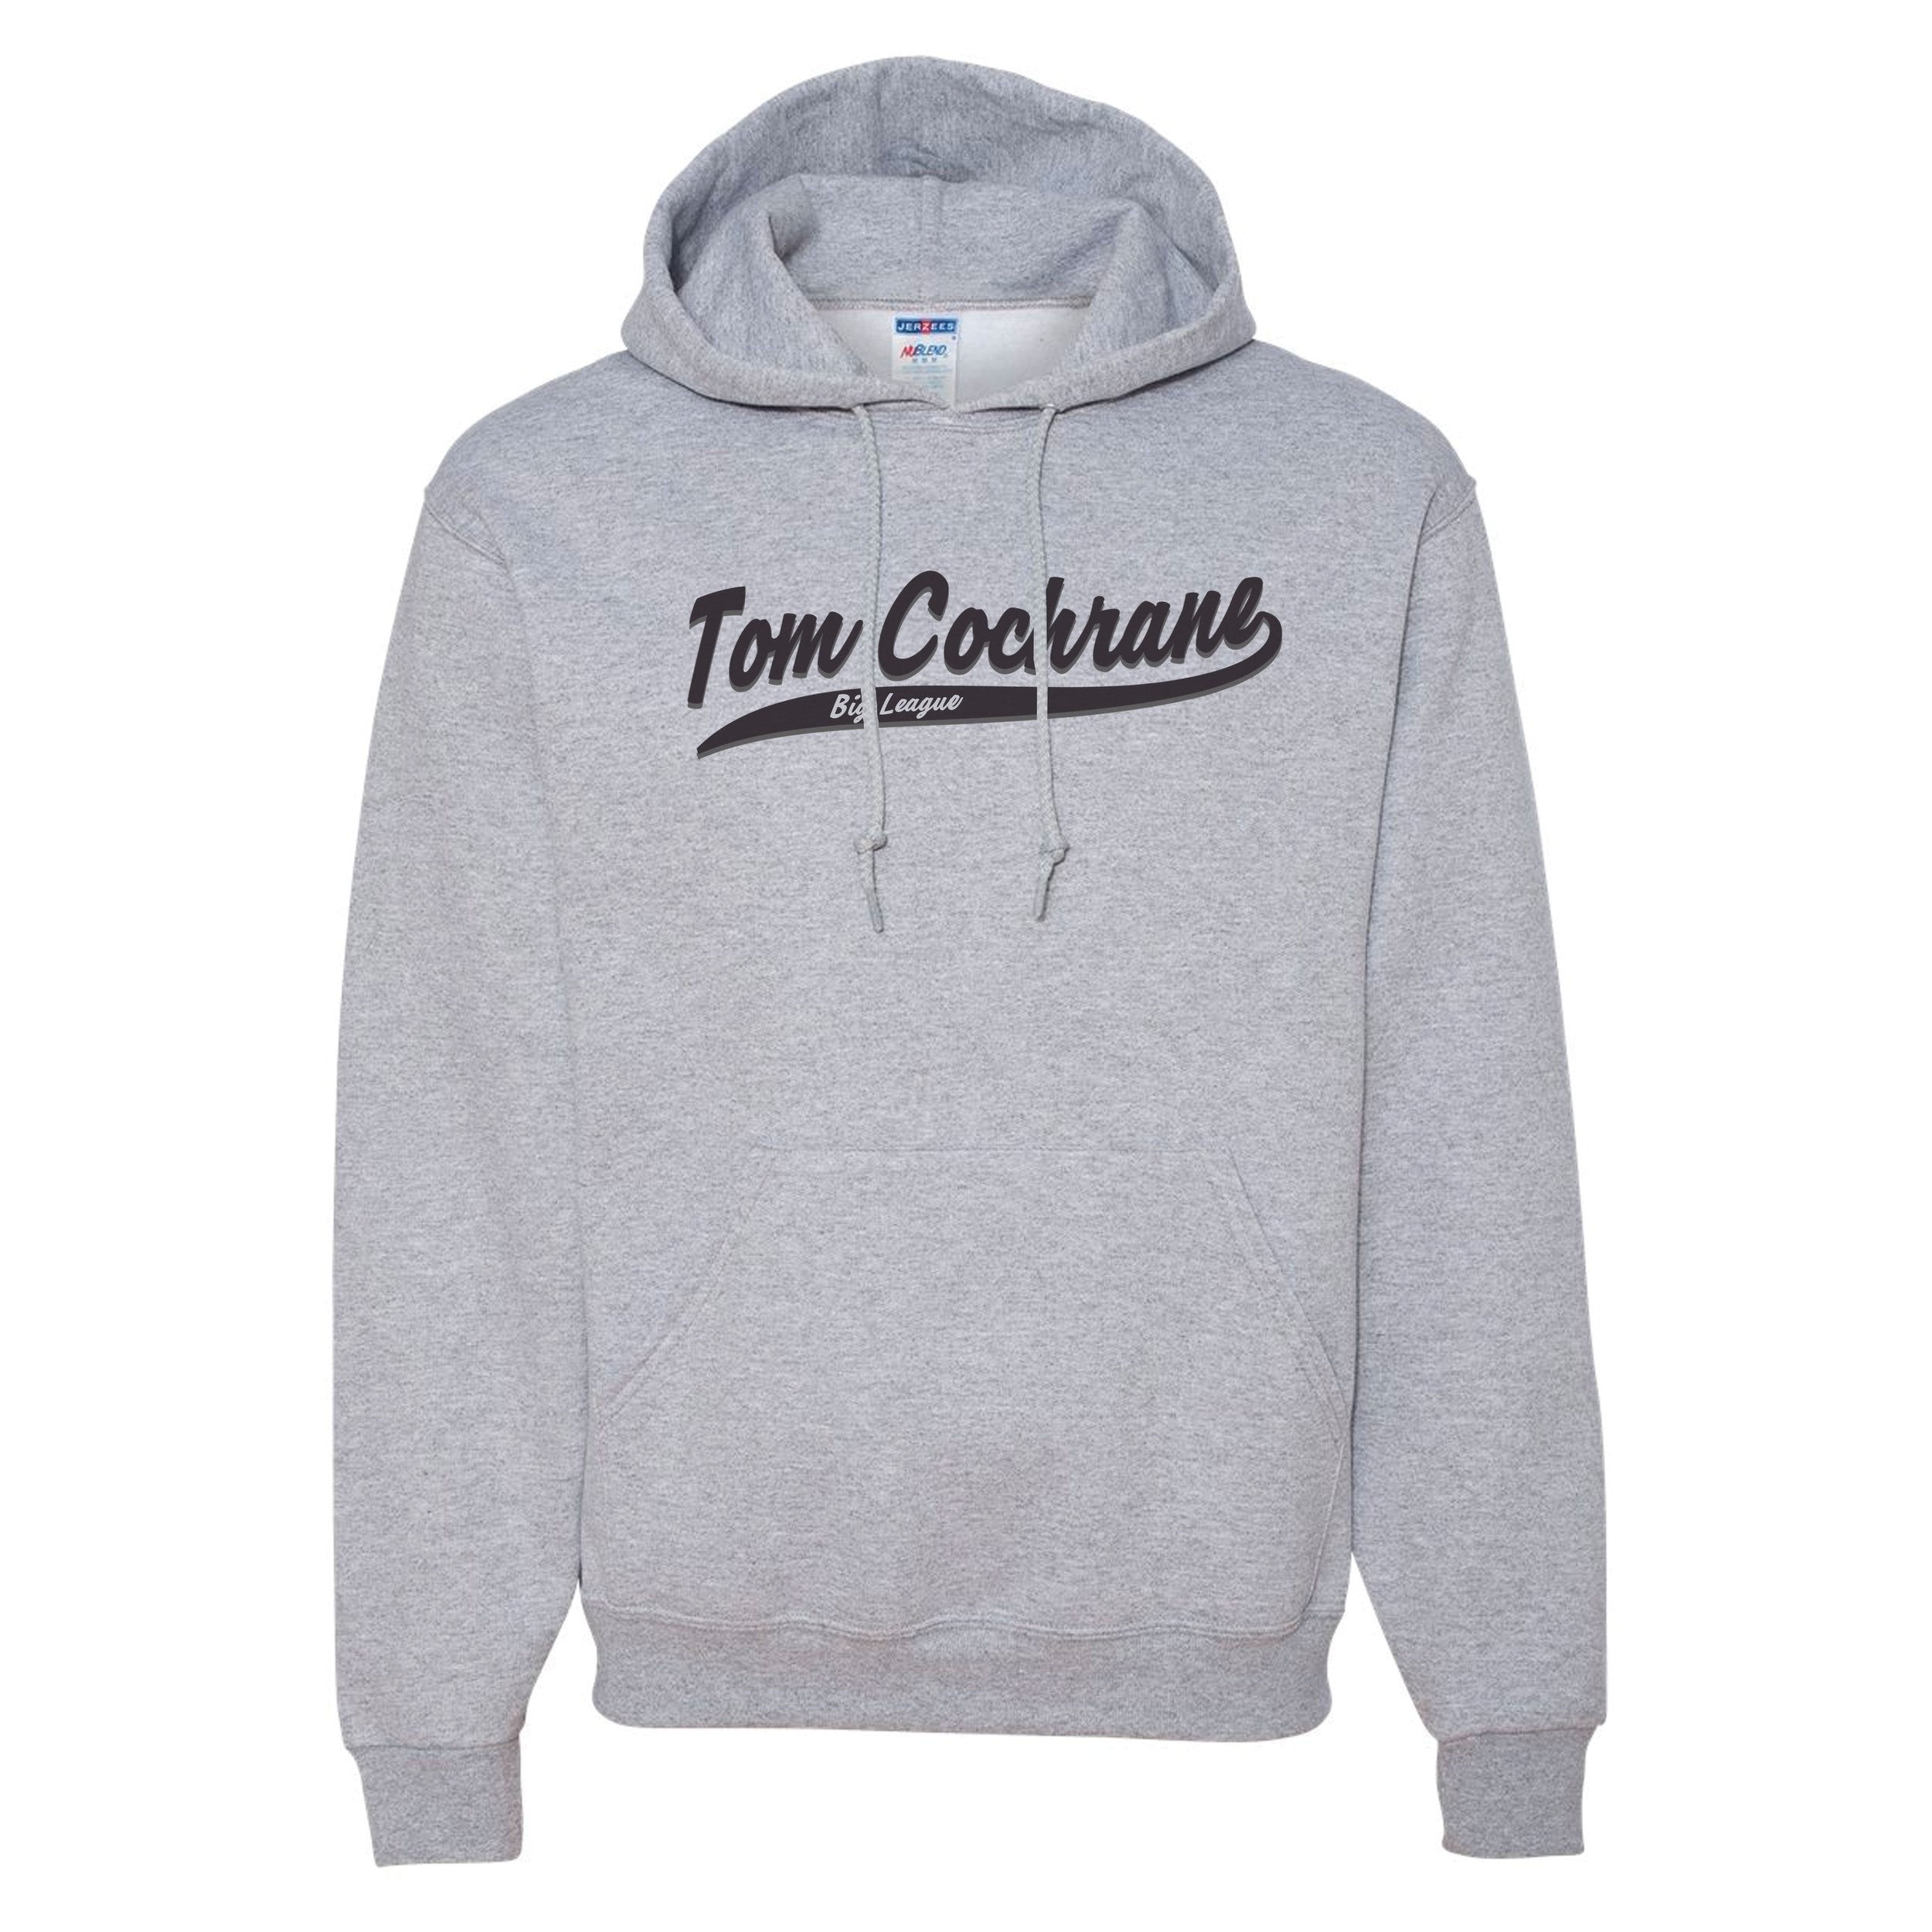 Tom Cochrane - Big League Hoodie (Grey/Black)